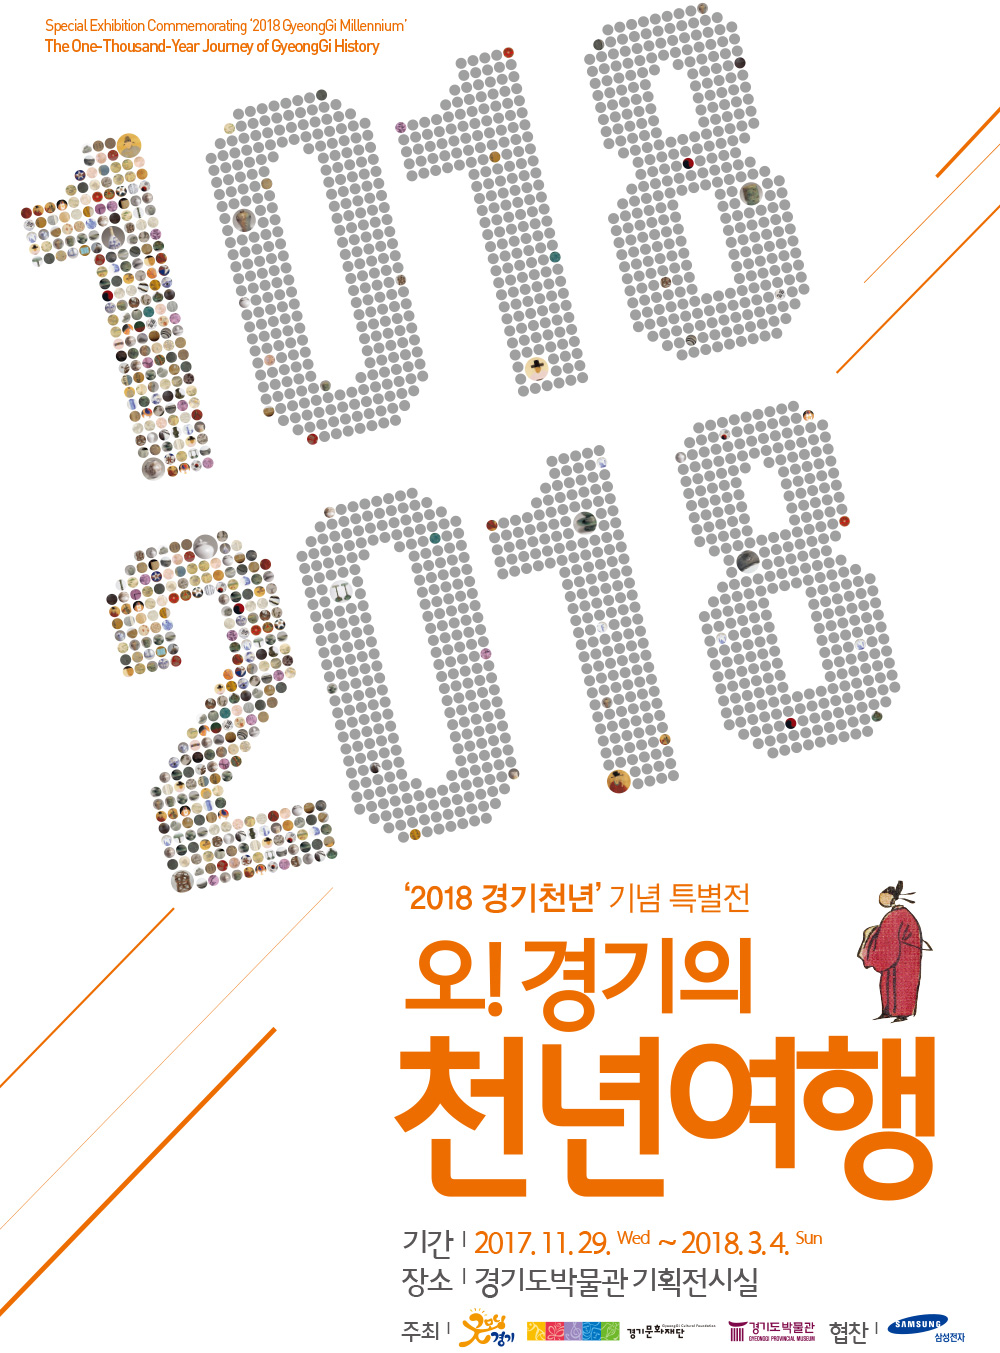 《The One Thousand Year Journey through Gyeonggi History》 Special Exhibition Commemorating ‘2018 Gyeonggi Millennium’